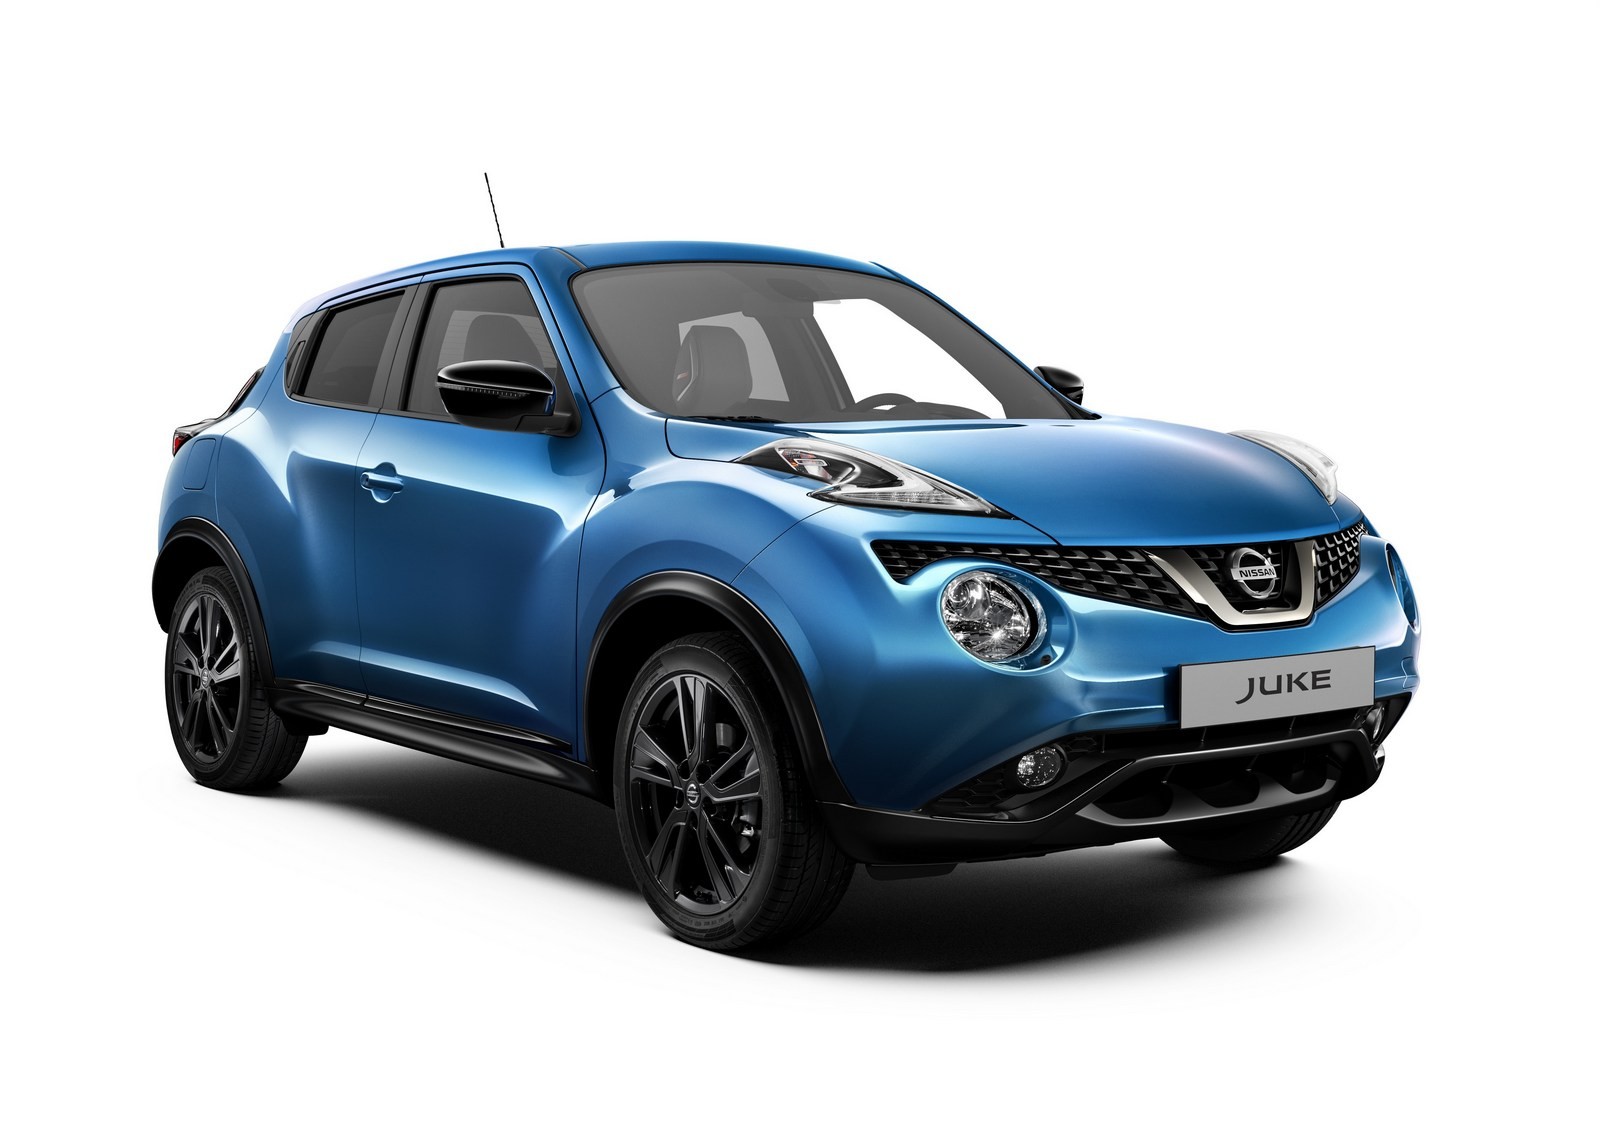 Nissan Juke - Small Crossover Market Guide Del 3